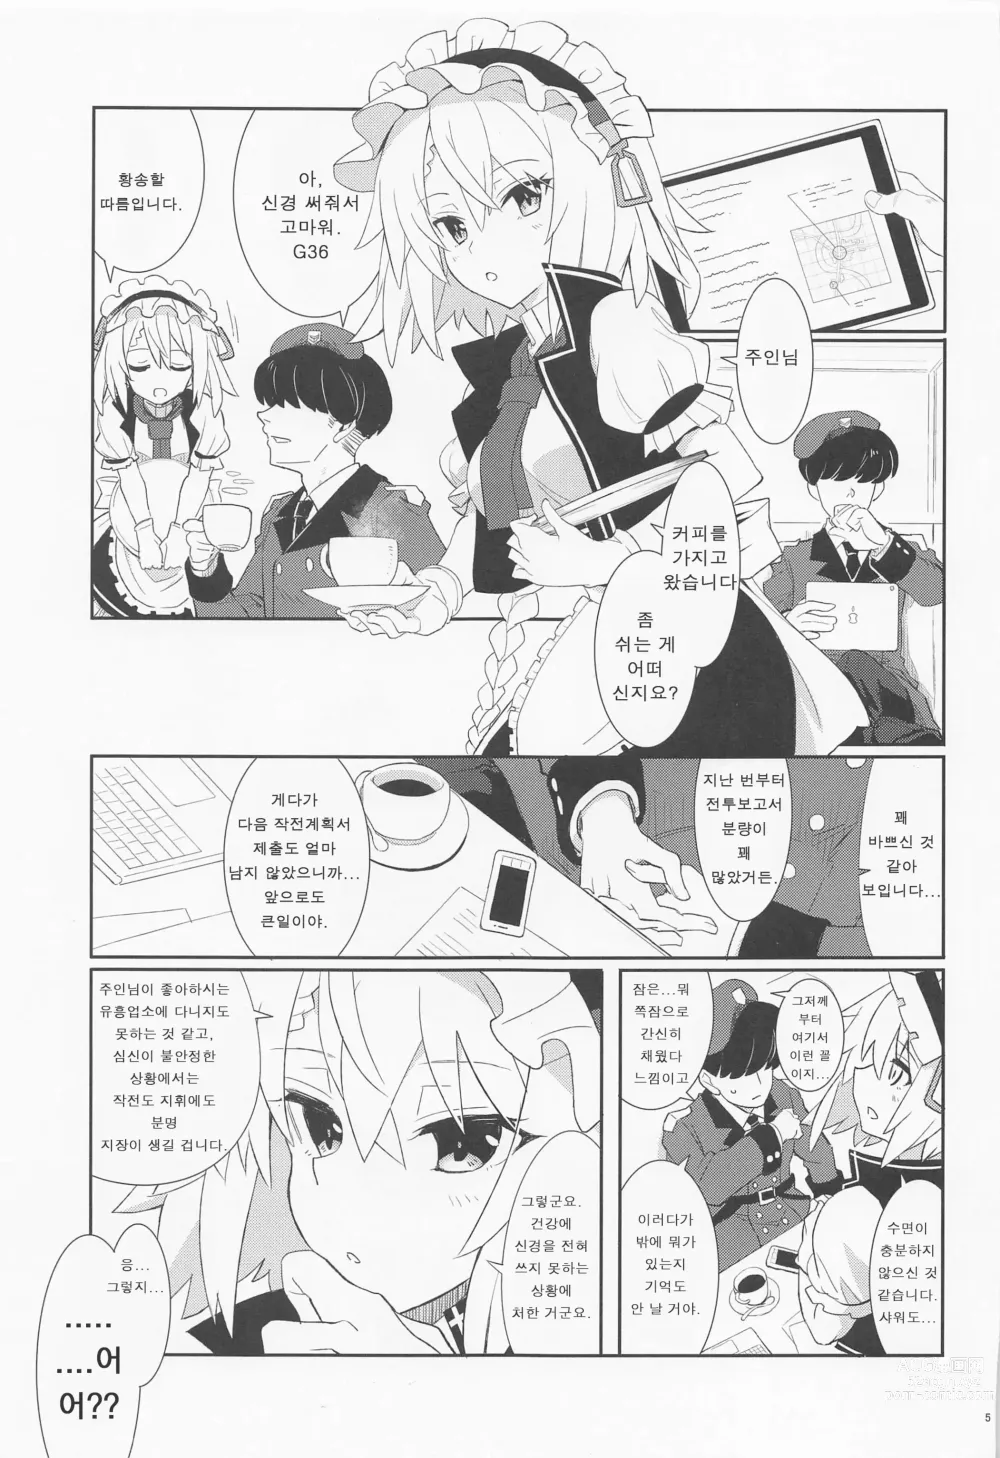 Page 3 of doujinshi 봉사하겠습니다. 주인님.